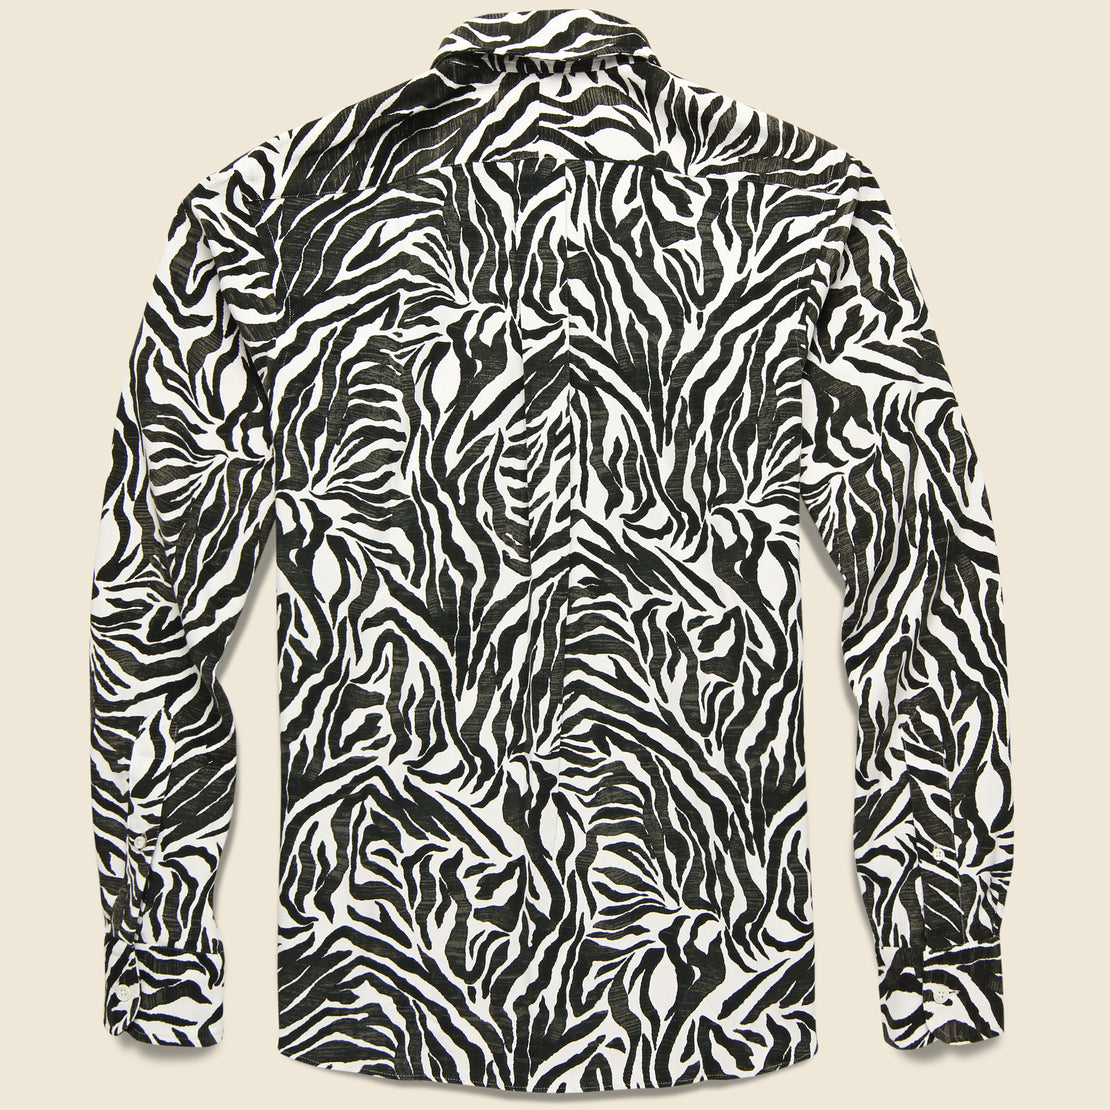 Zebra Corduroy Shirt - Black/White - Hamilton Shirt Co. - STAG Provisions - Tops - L/S Woven - Other Pattern